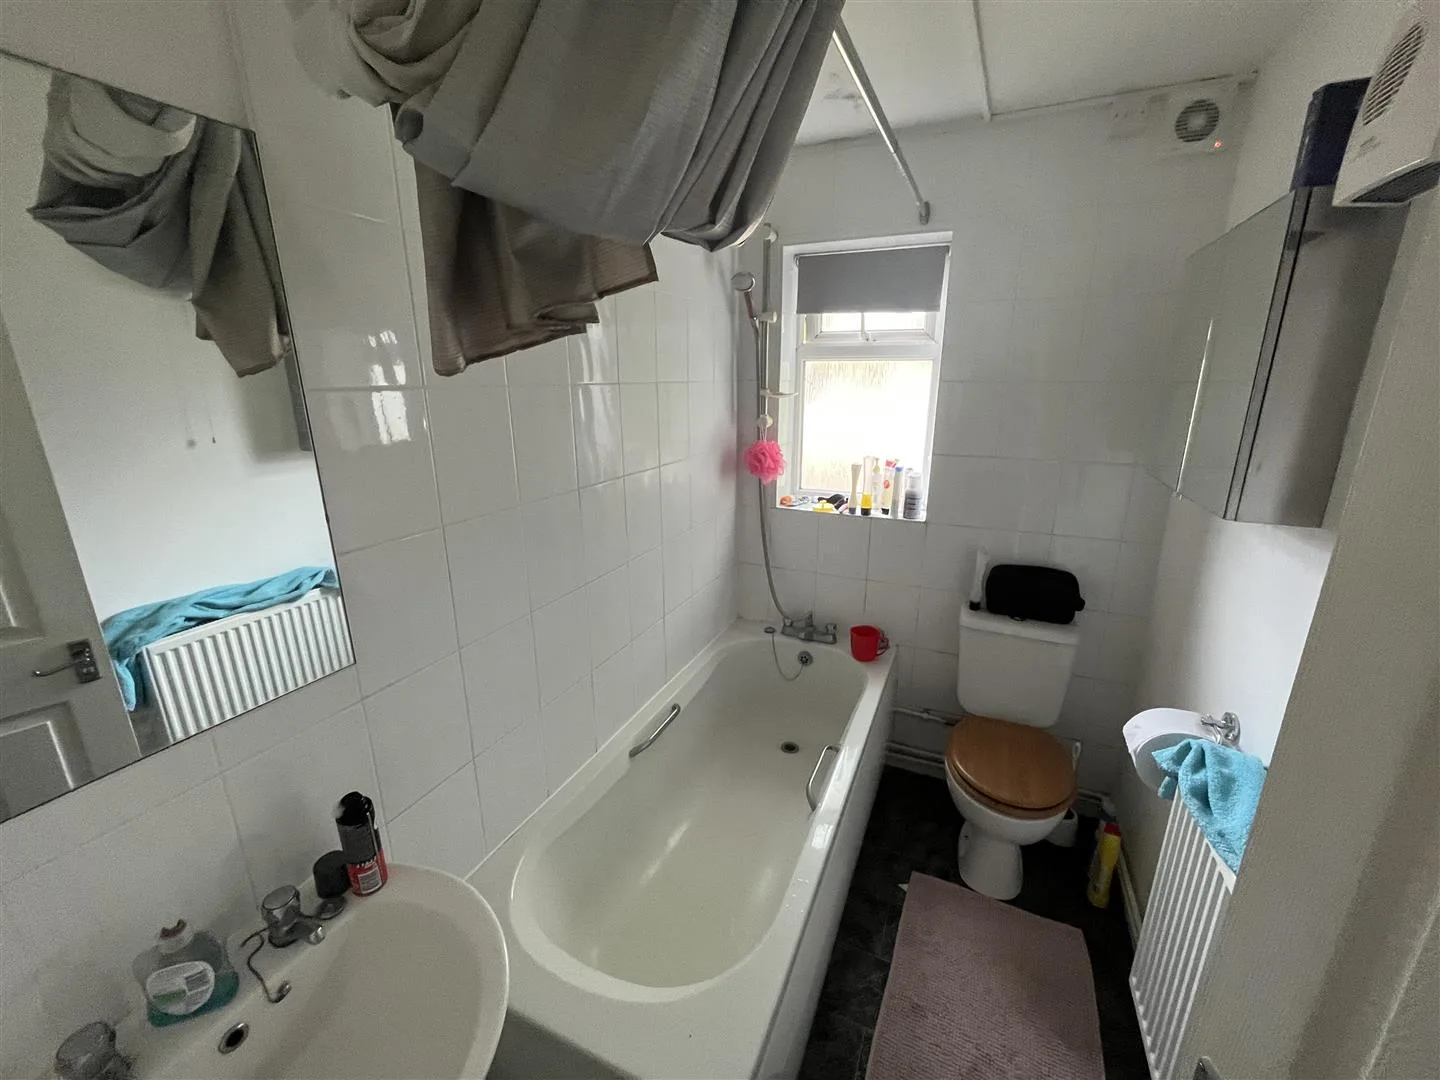 Inside view of a bathroom inside a house with bathtub